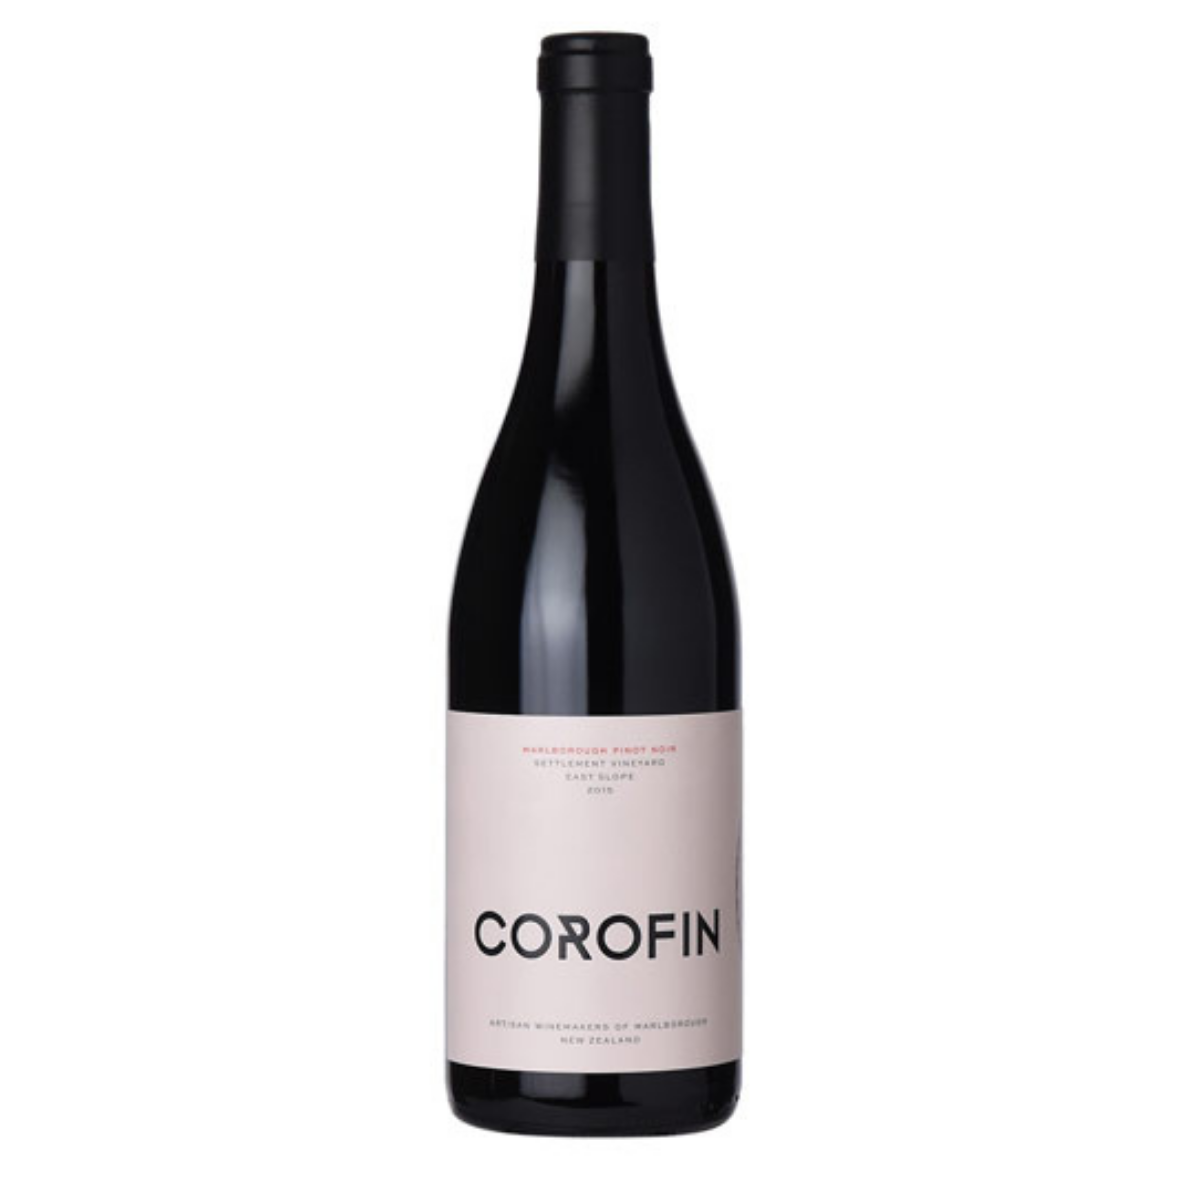 Corofin, Marlborough, Settlement Vineyard East Slope Pinot Noir 2015 - Magnum 1.5L